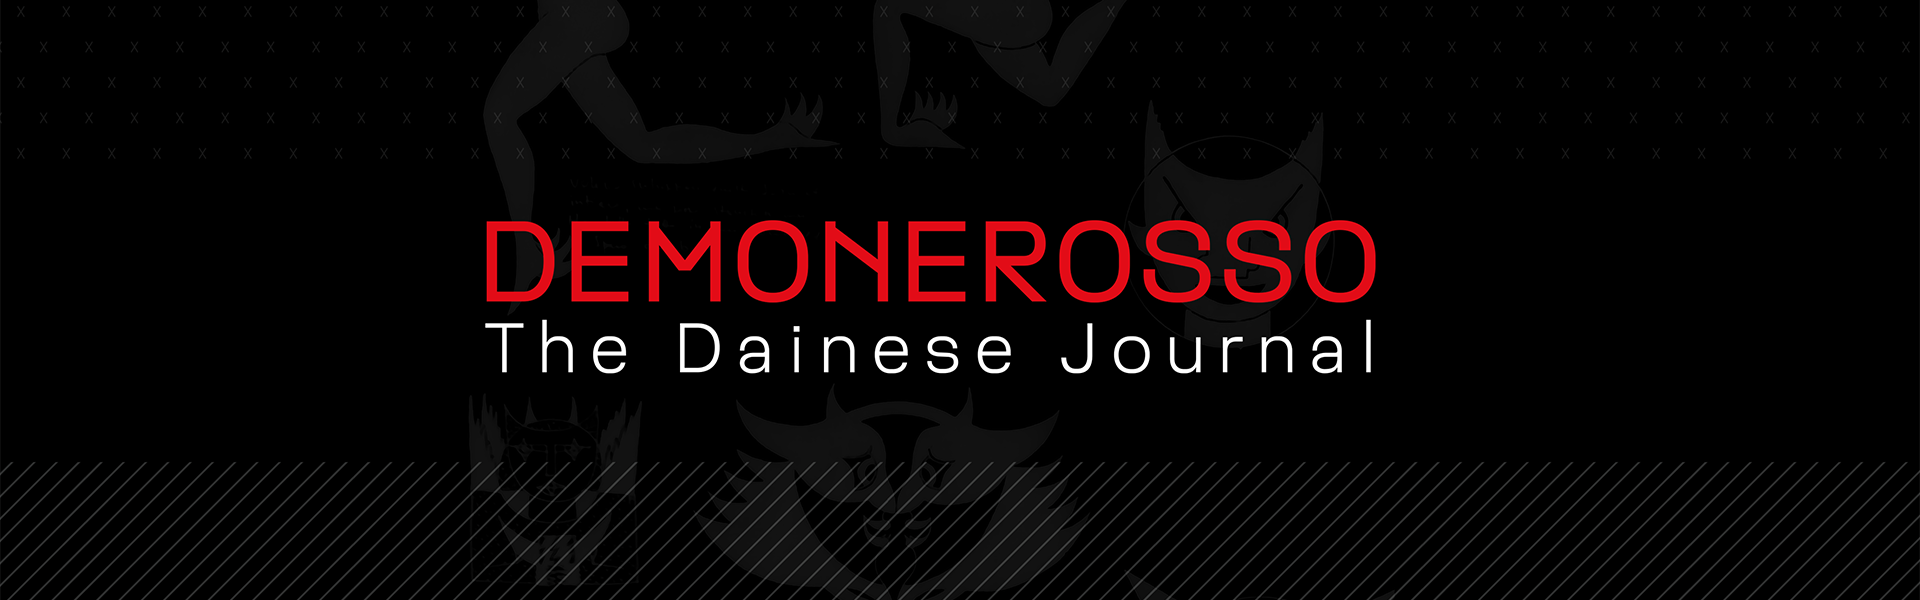 Demonerosso: the Dainese journal